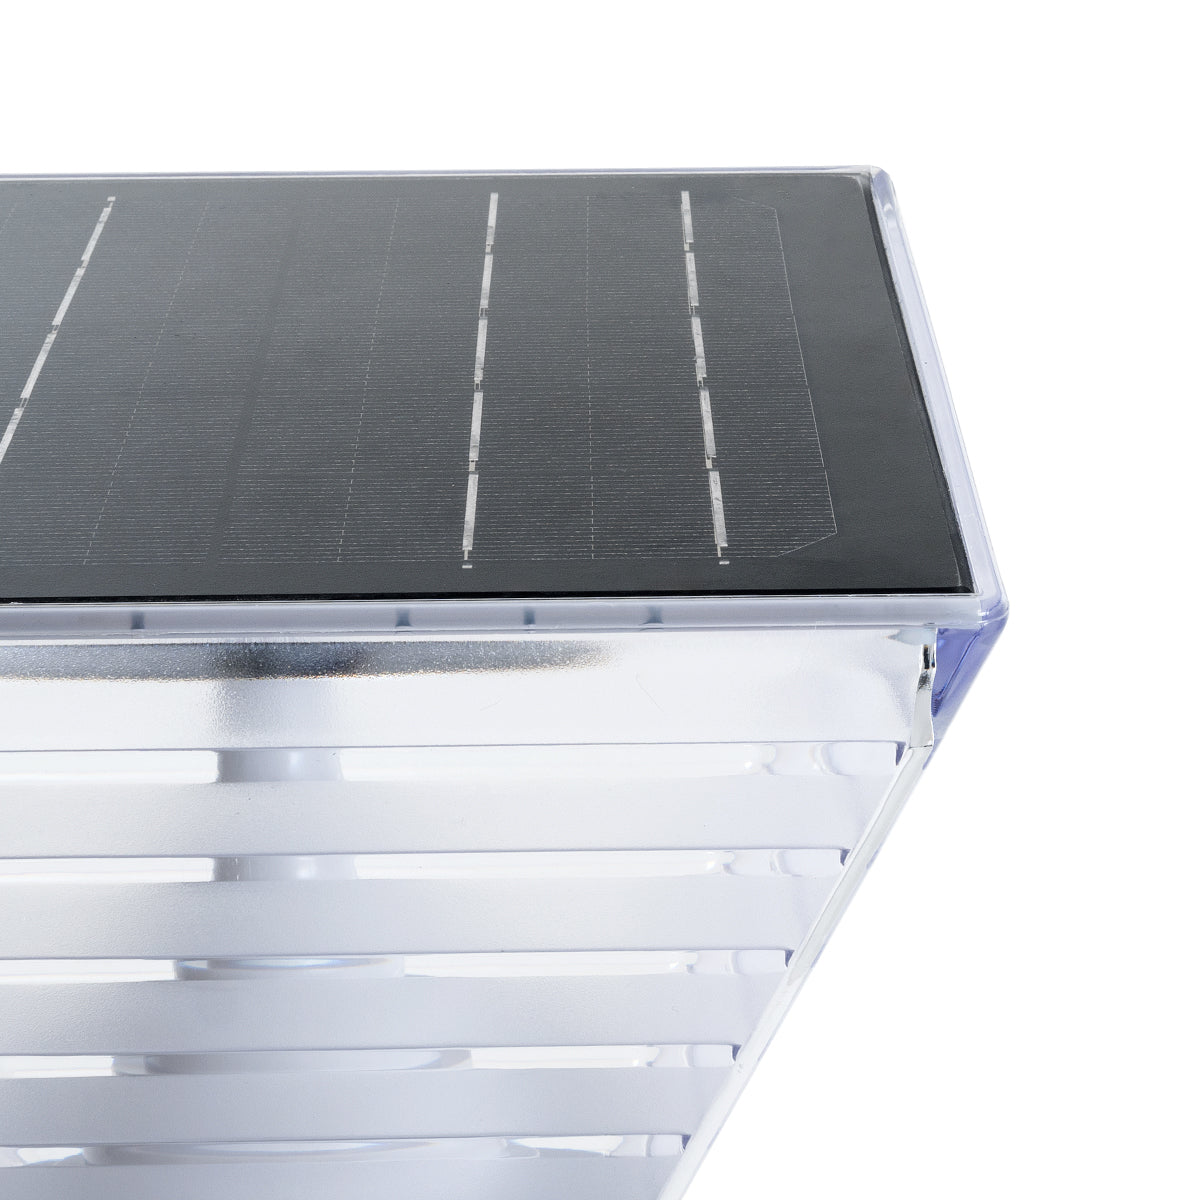 GloboStar® JESSIE S-40061 Αυτόνομο Ηλιακό Φωτιστικό Κήπου - Κολωνάκι Αρχιτεκτονικού Φωτισμού Εξωτερικού Χώρου LED 10W 330lm 120° με Ενσωματωμένο Φωτοβολταϊκό Panel 6V 2W & Επαναφορτιζόμενη Μπαταρία Li-ion 3.2V 1800mAh με Αισθητήρα Ημέρας-Νύχτας - Αδιάβ...